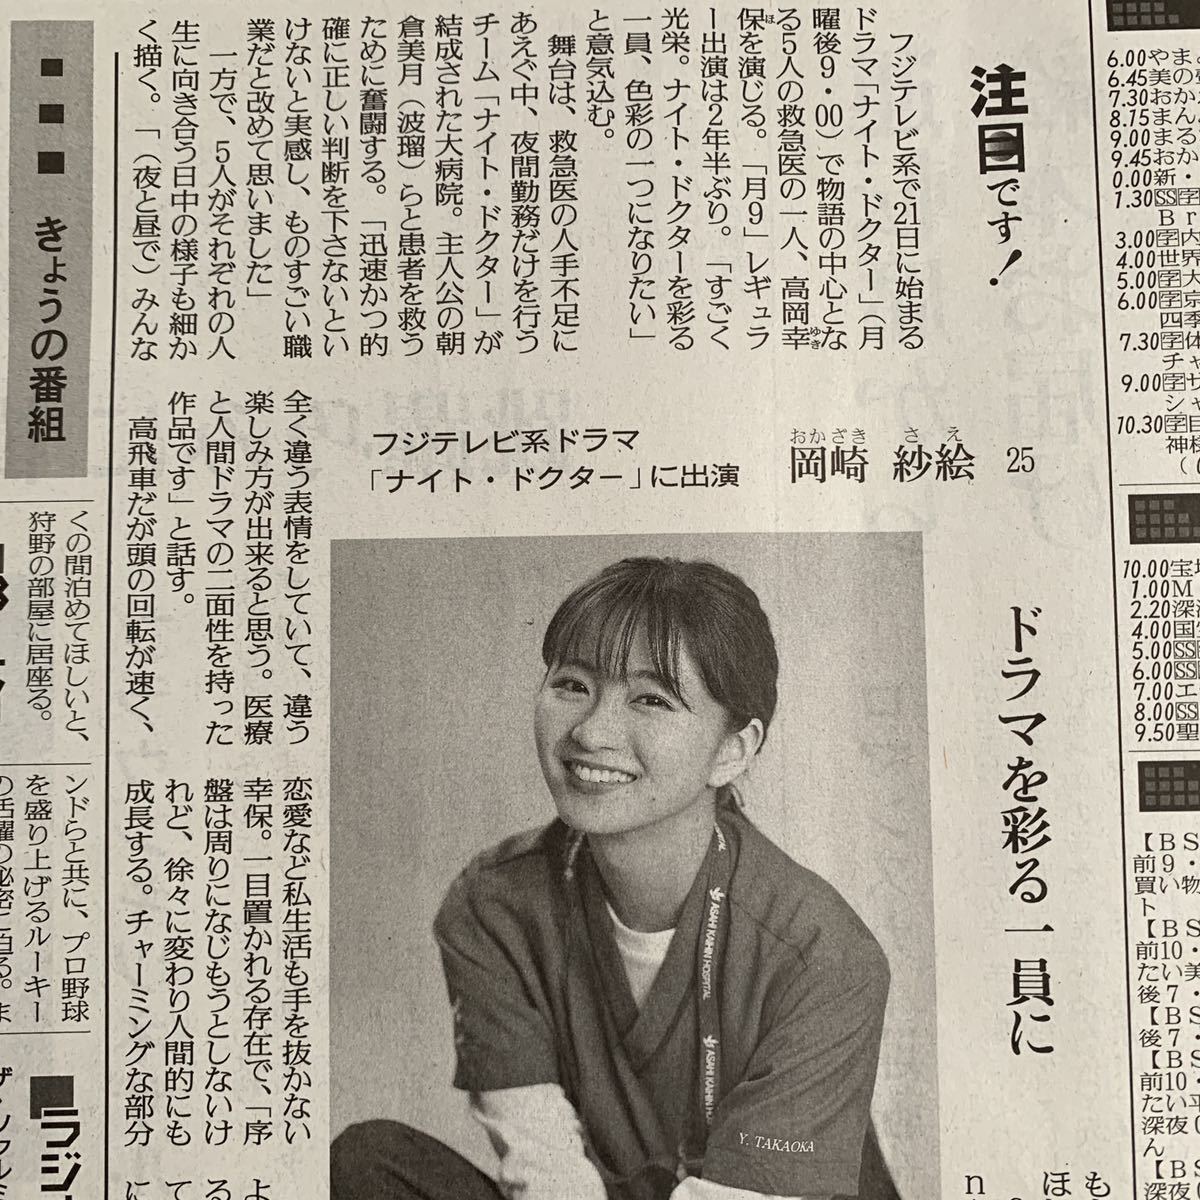  super valuable! Matsushita . flat SHOW channel Okazaki .. Night dokta- drama ... one member . attention.!.. newspaper 6/19